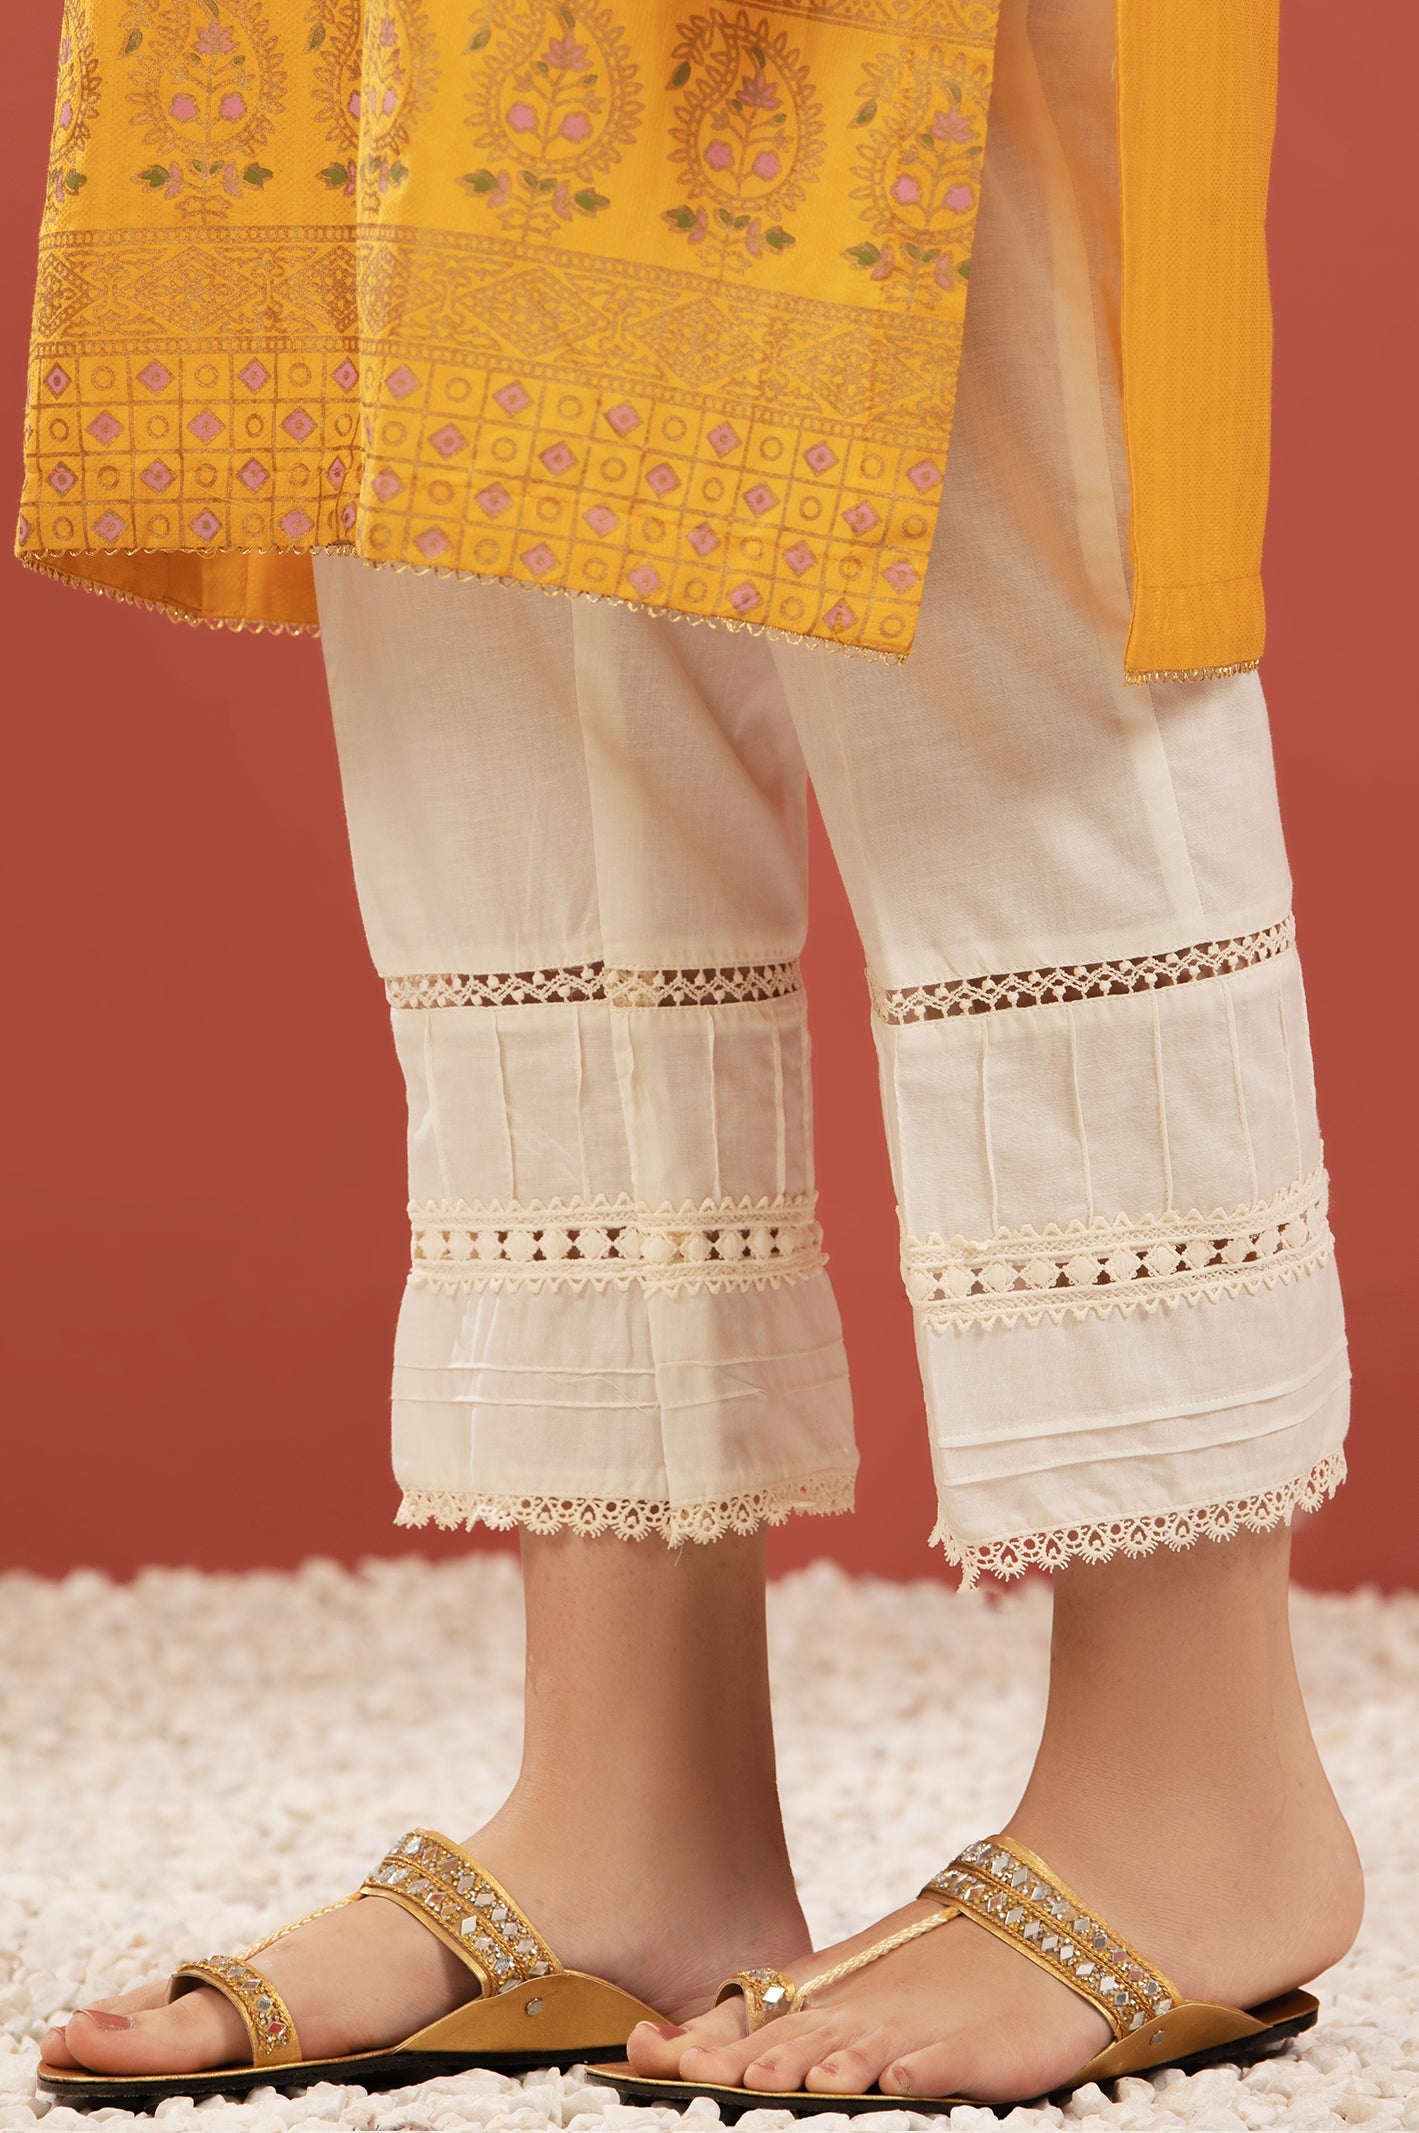 Ladies Trousers Pakistani Indian 7XL Capri Pencil Pants Embroidery Shalwar  SF71  eBay